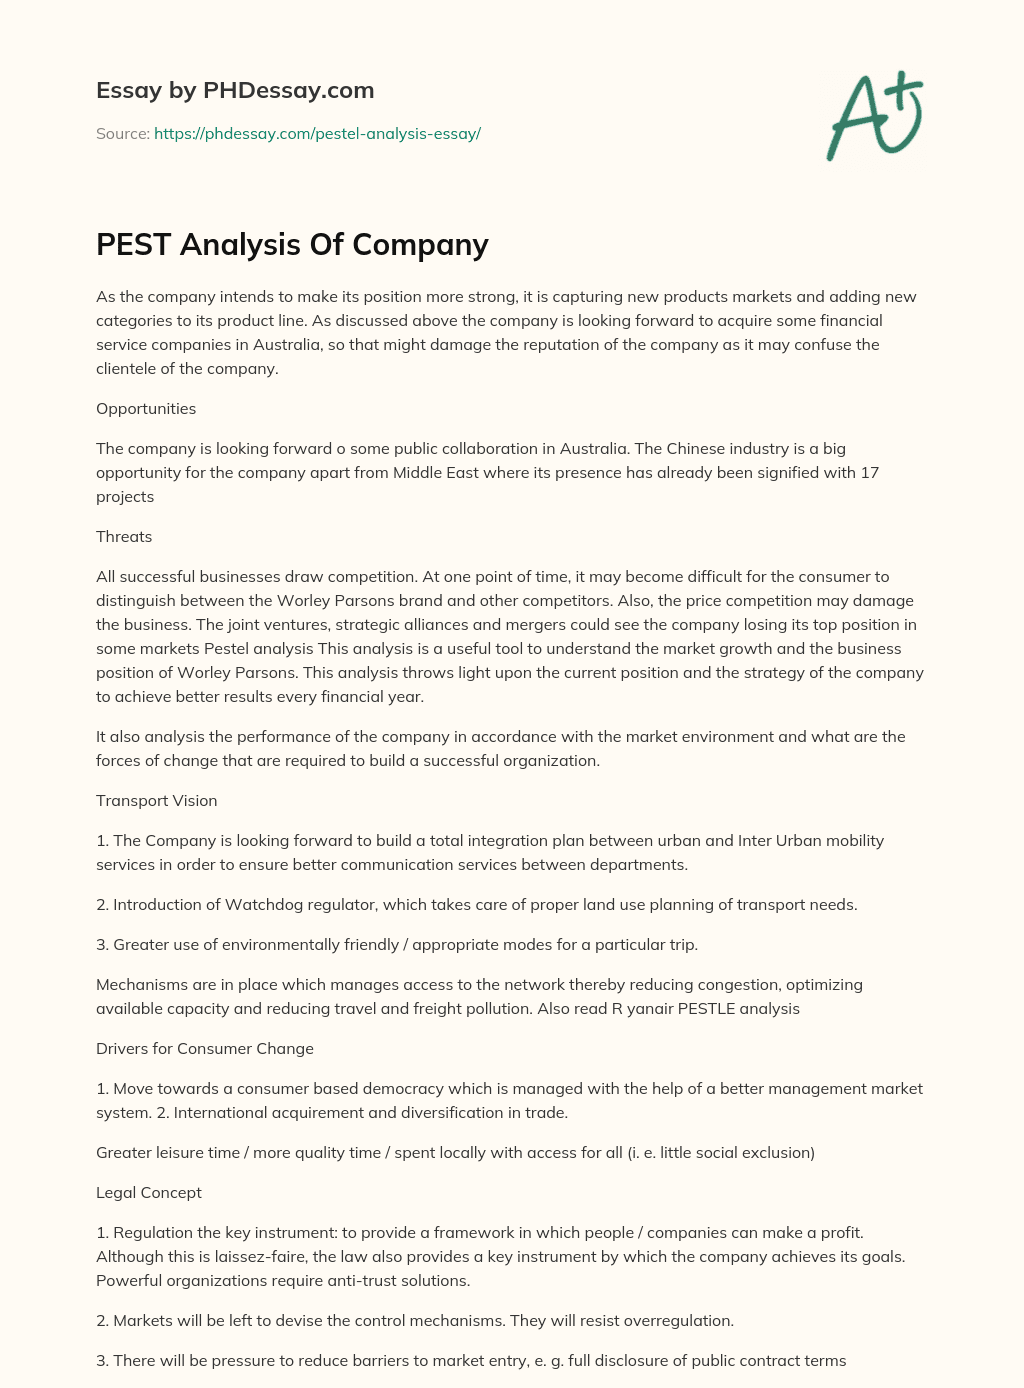 PEST Analysis Of Company essay